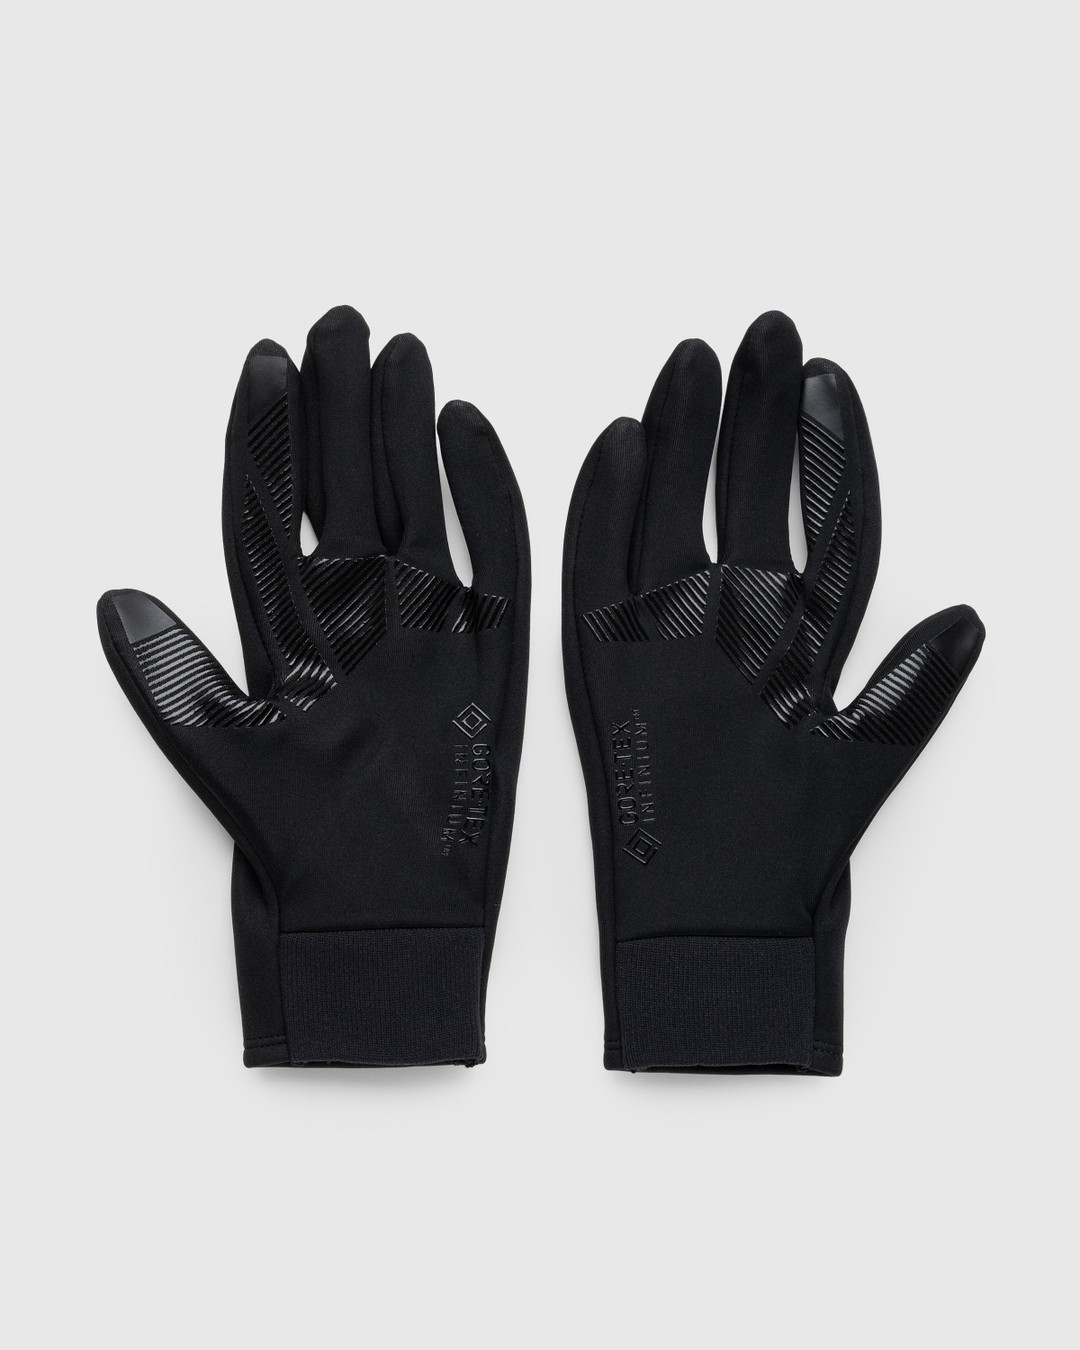 Y-3 – GTX Gloves Black | Highsnobiety Shop